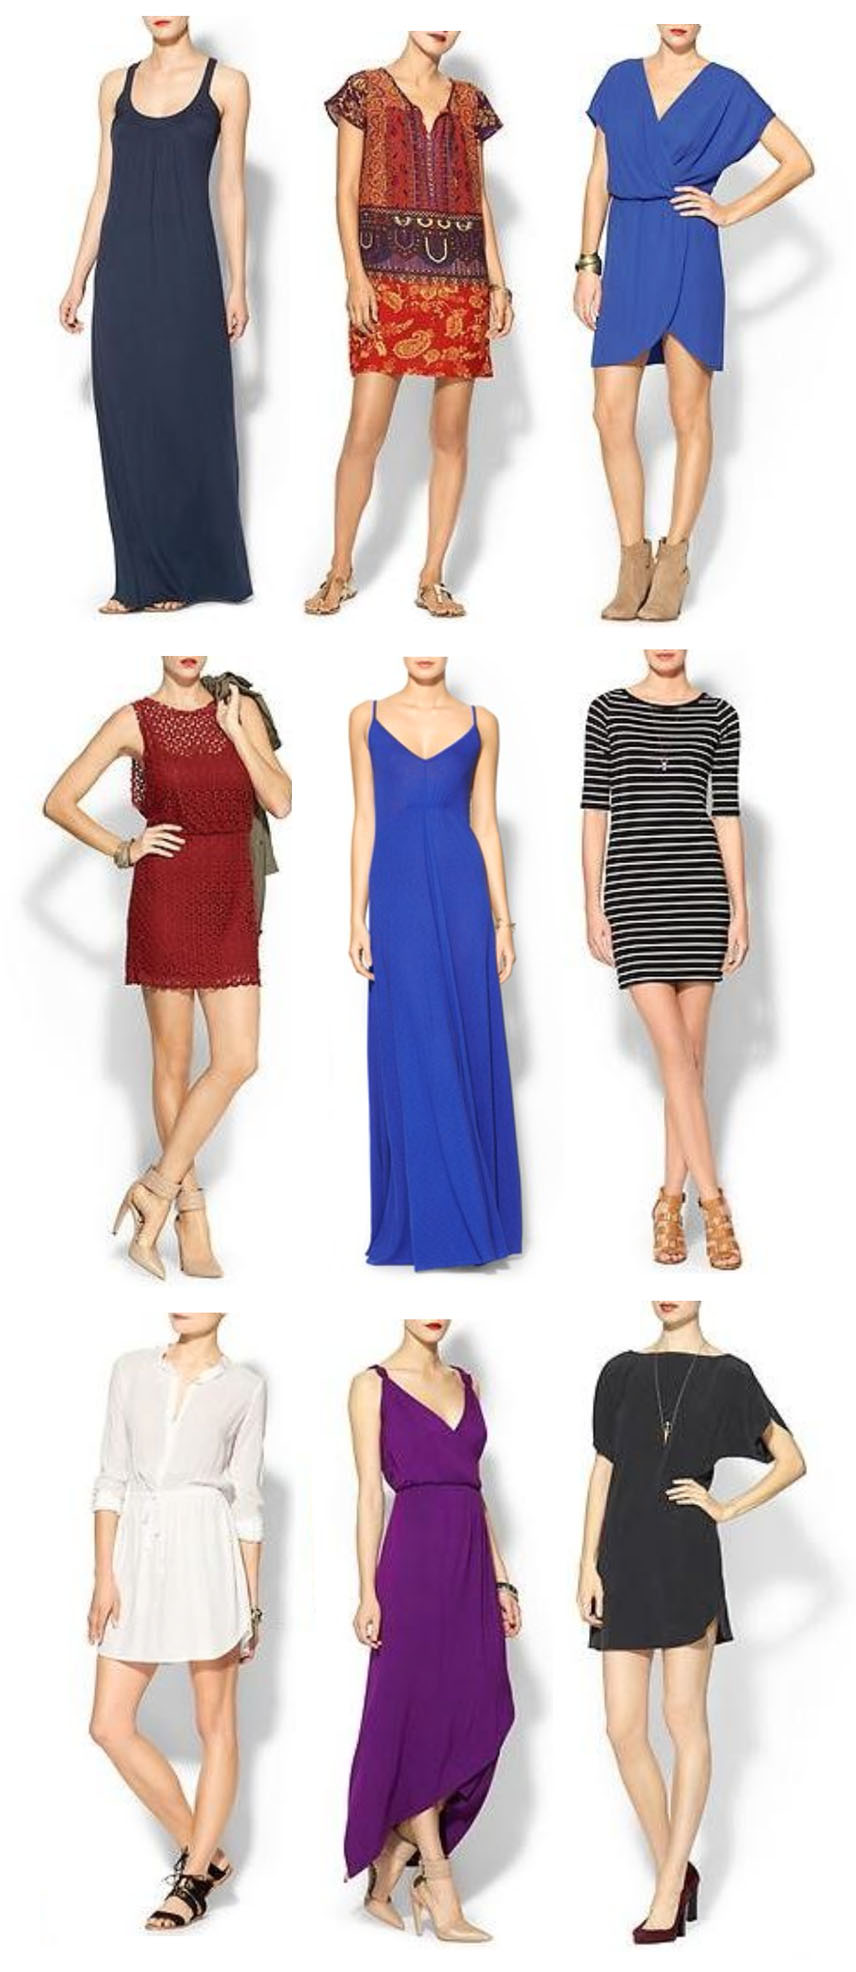 Wardrobe: Necklines | PepperDesignBlog.com